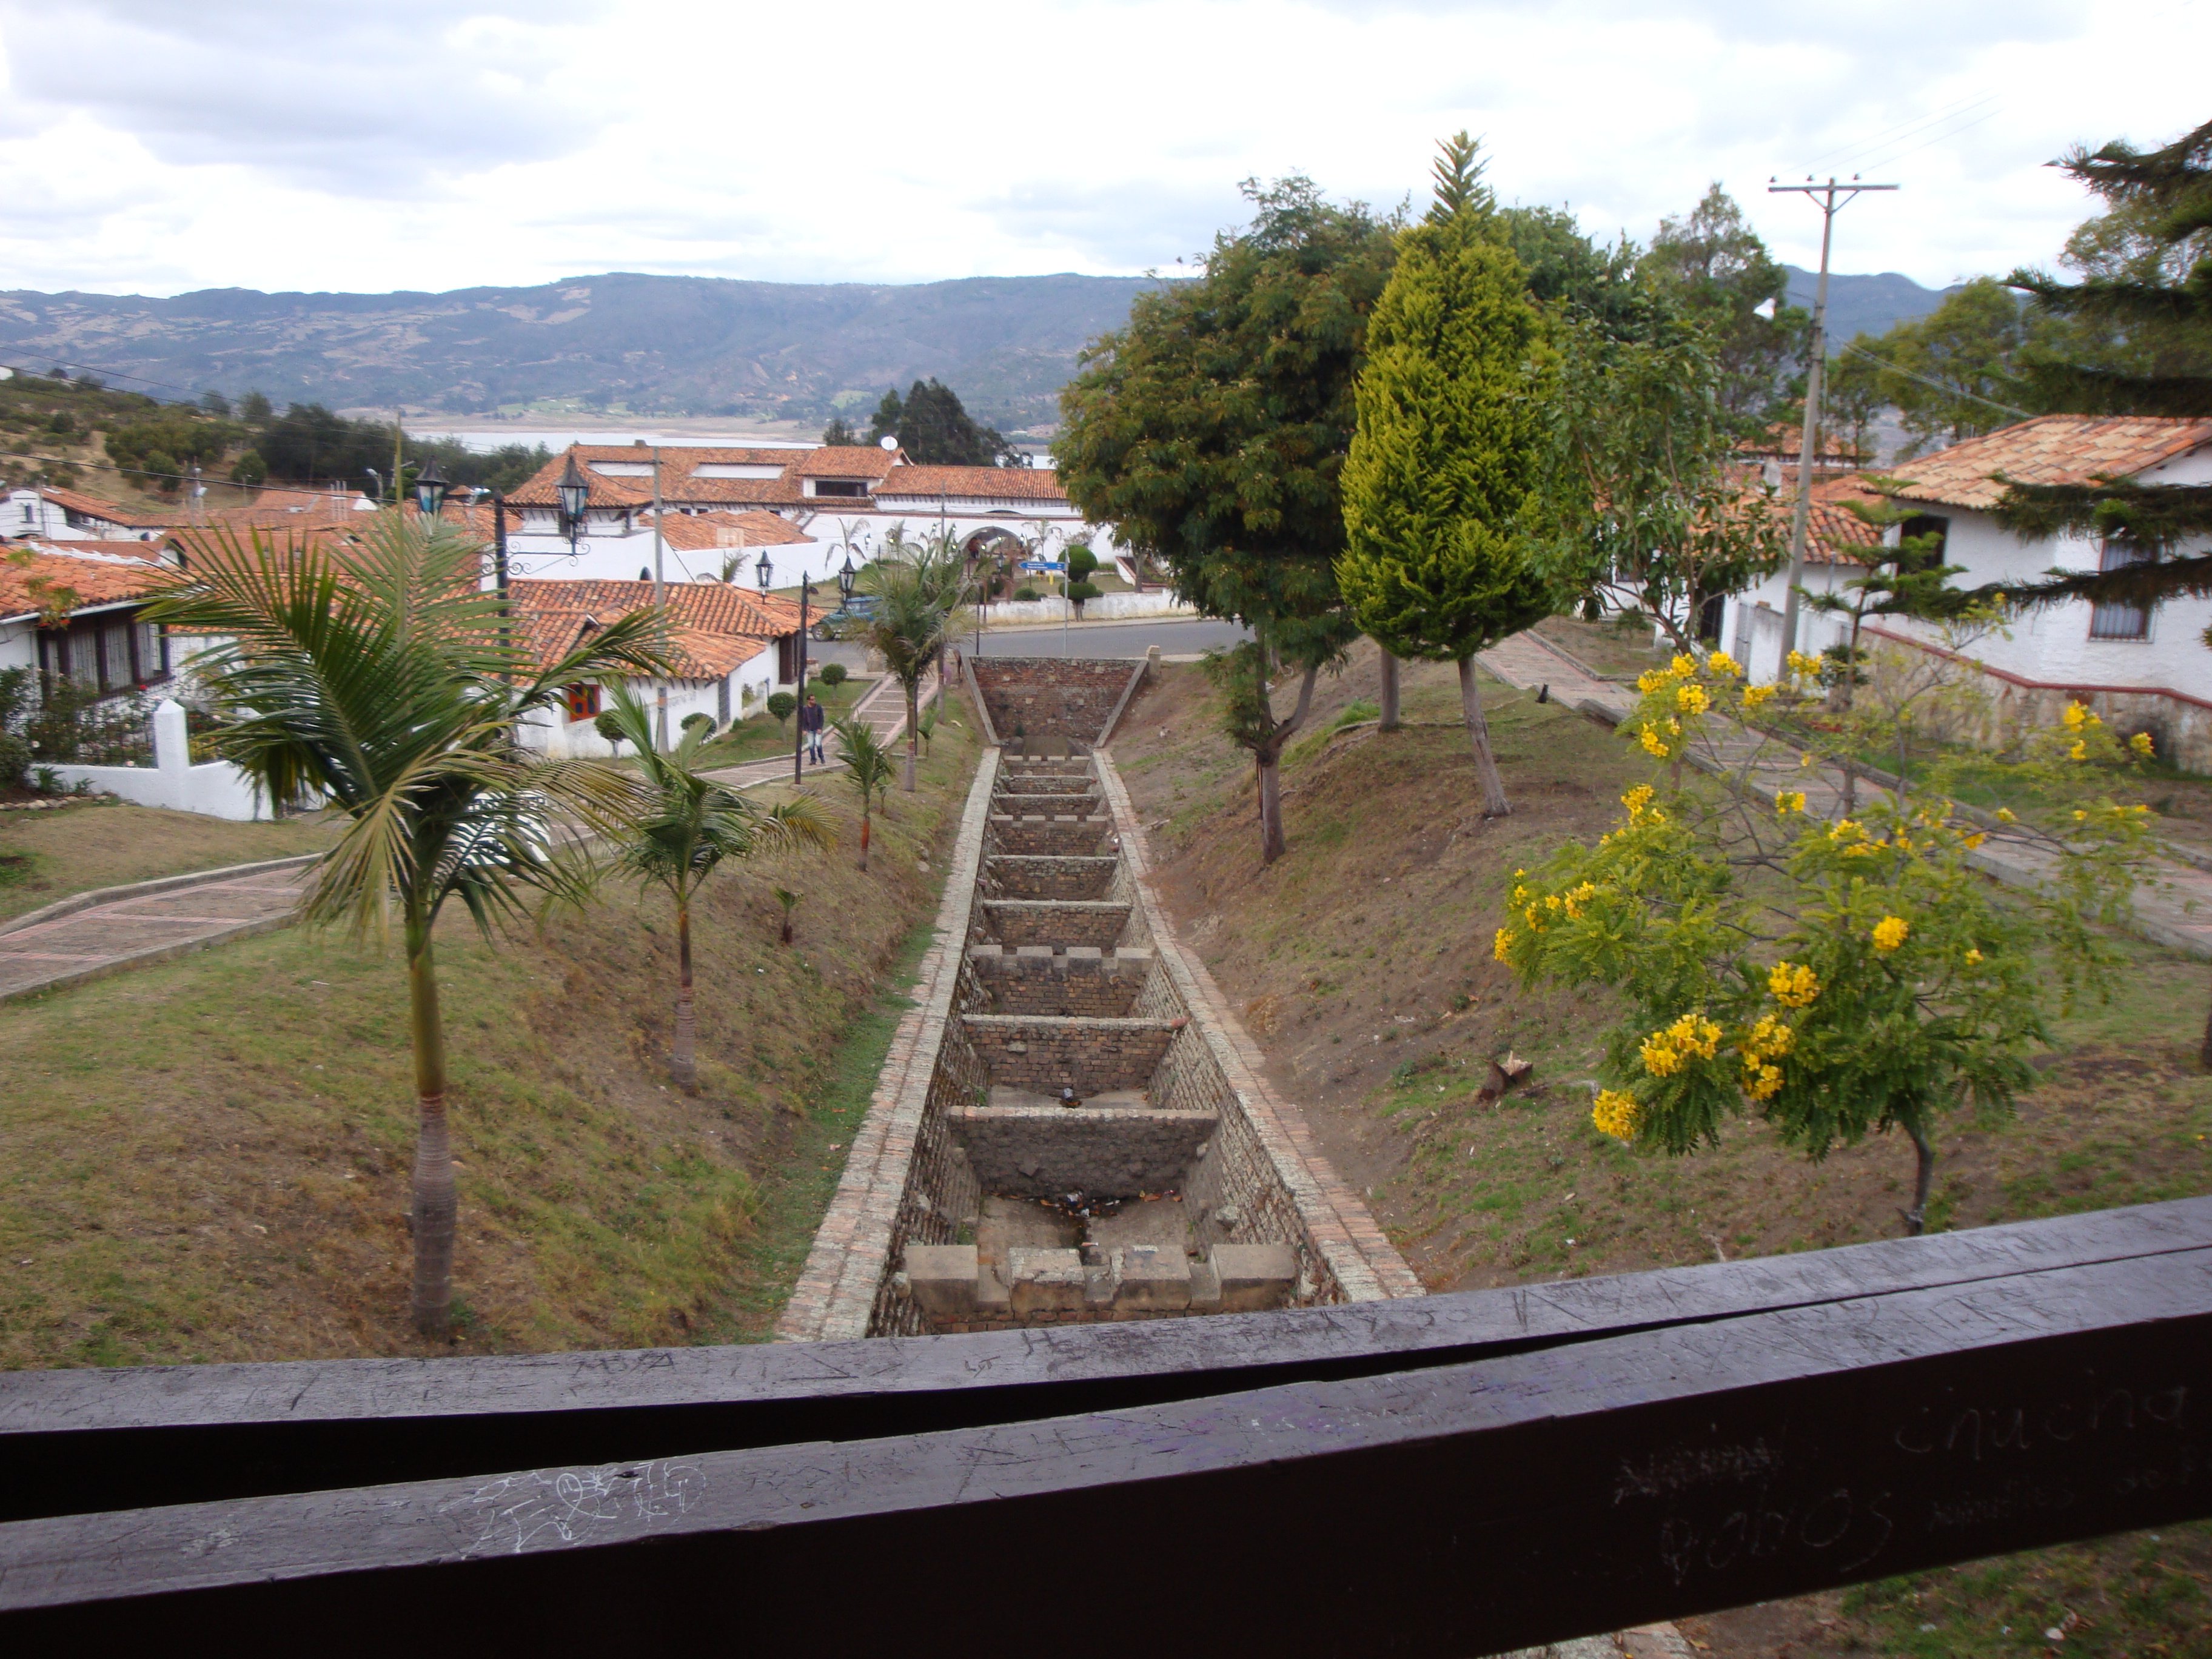 LOVER'S BRIDGE GUATAVITA GUATAVITA CUNDINAMARCA COLOMBIA